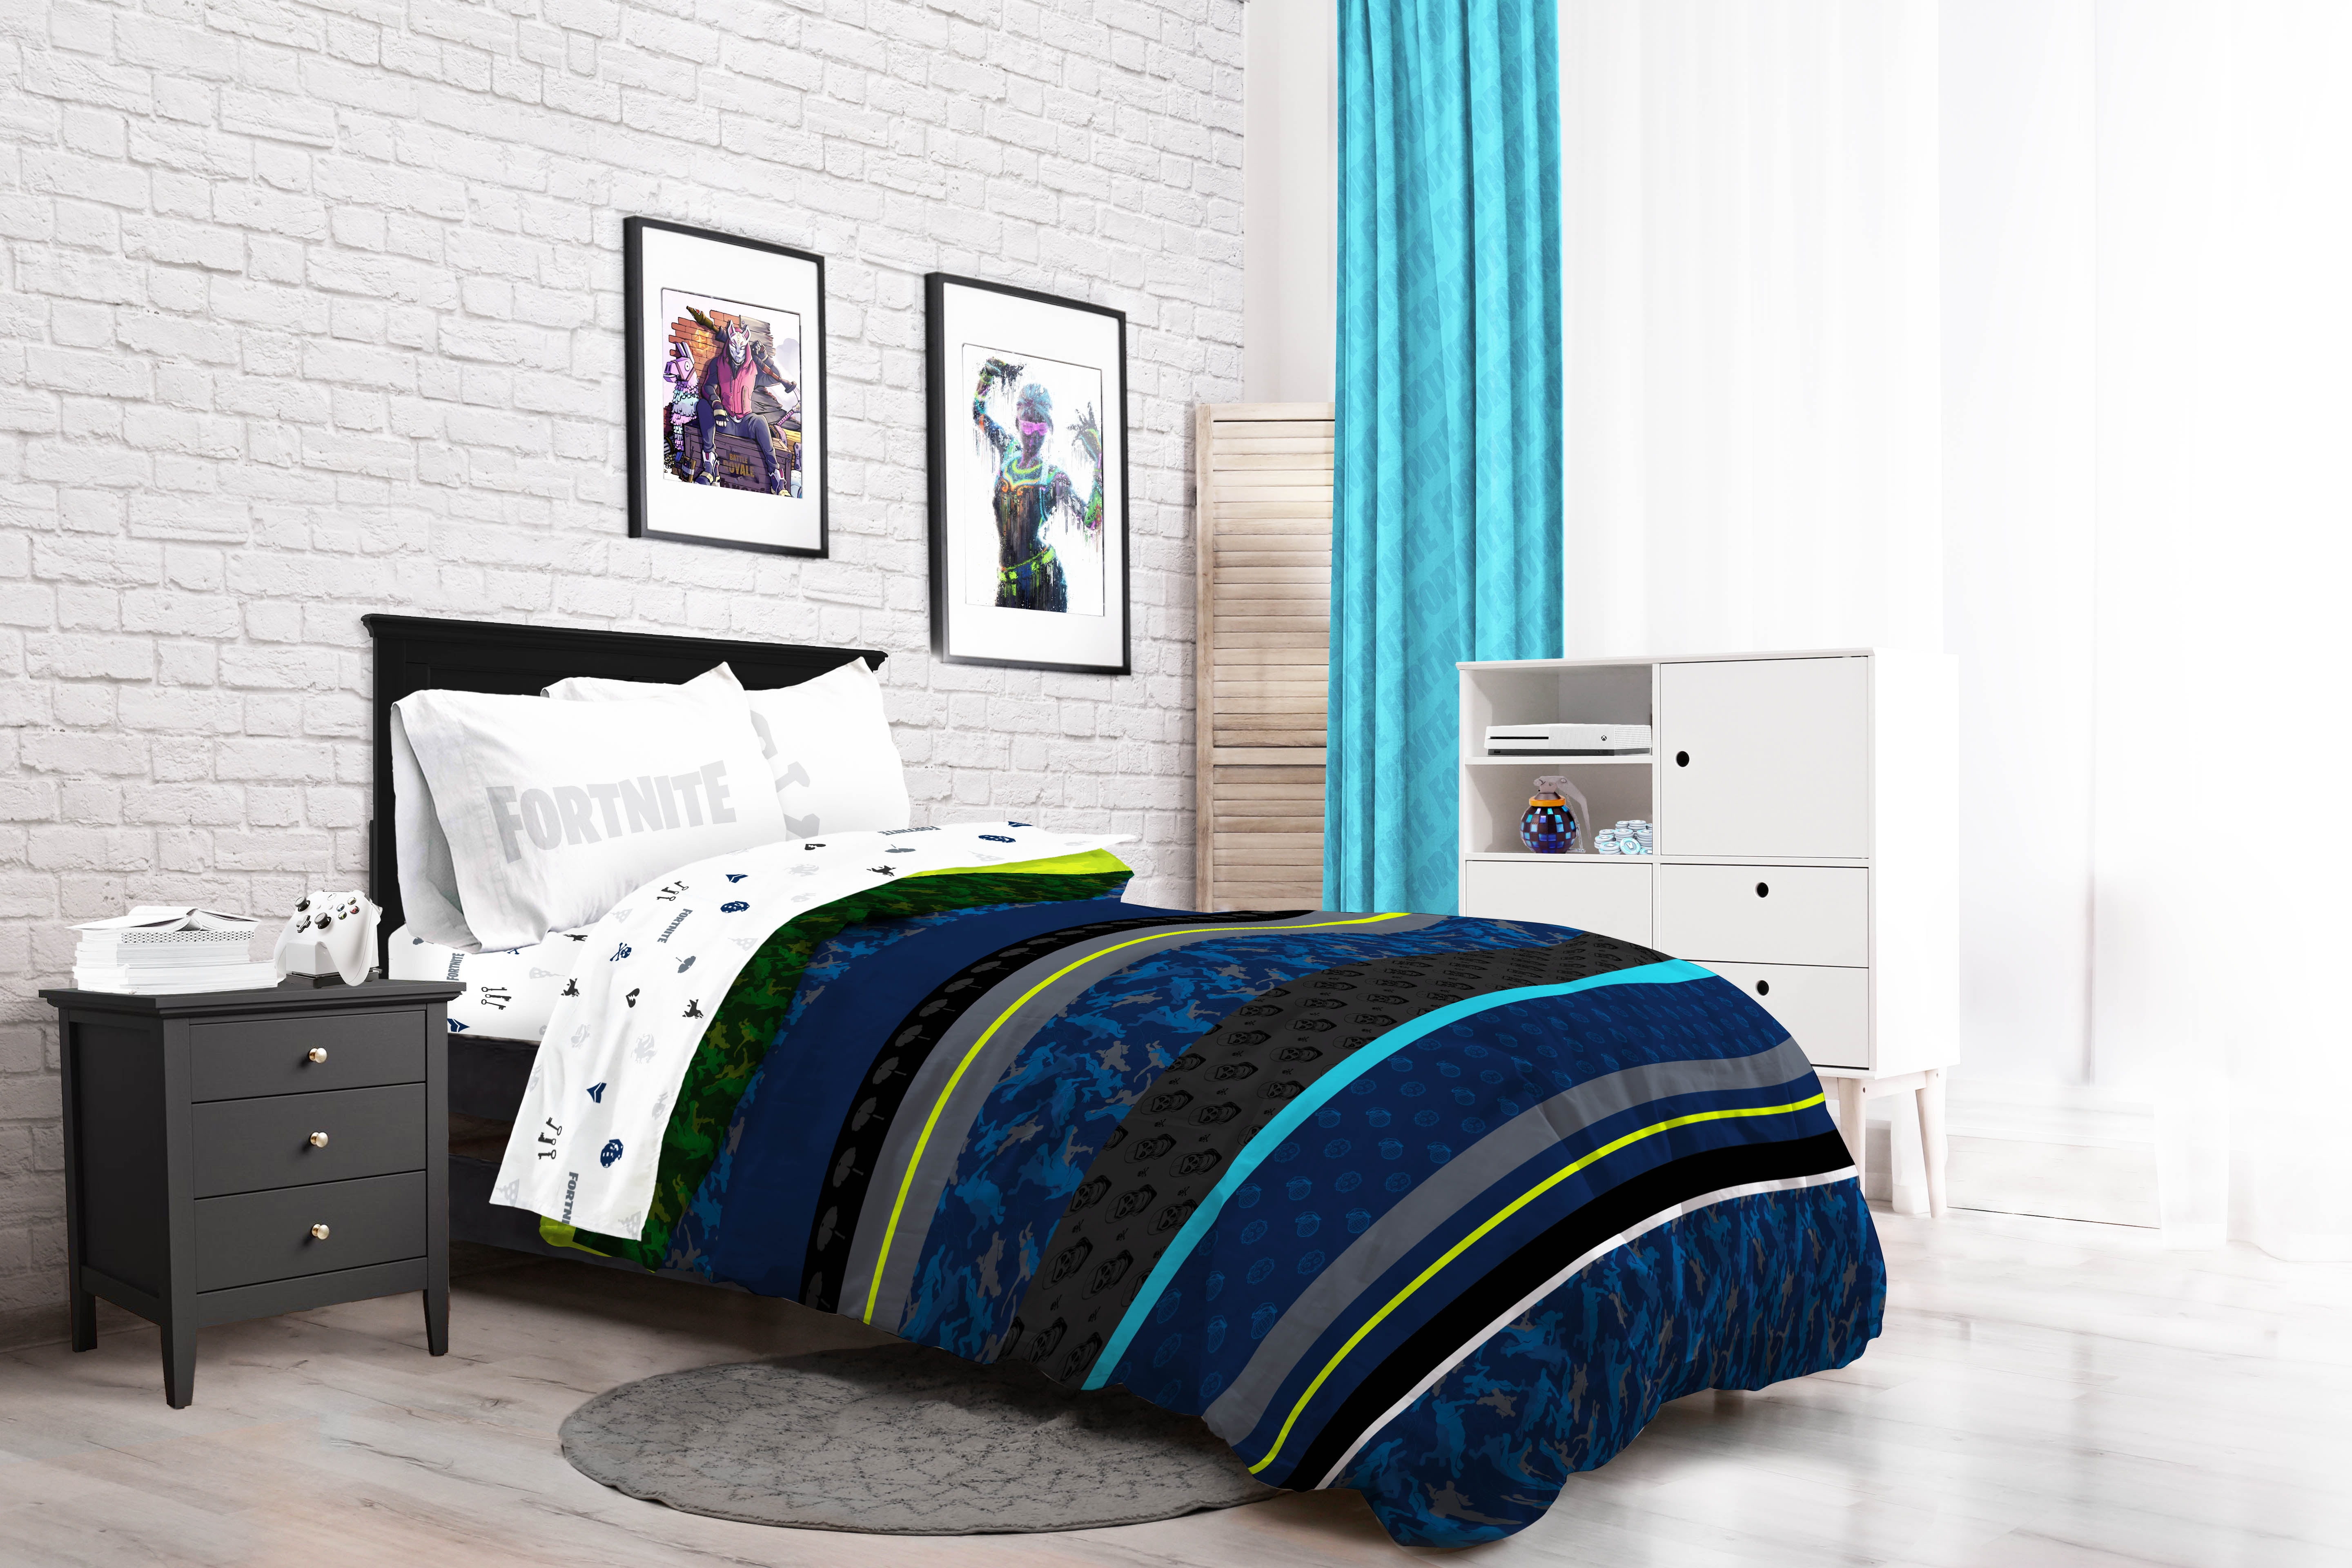 LICENSED FORTNITE Neon Reversible TWIN Comforter Blanket BED IN BAG 5 PC SET 